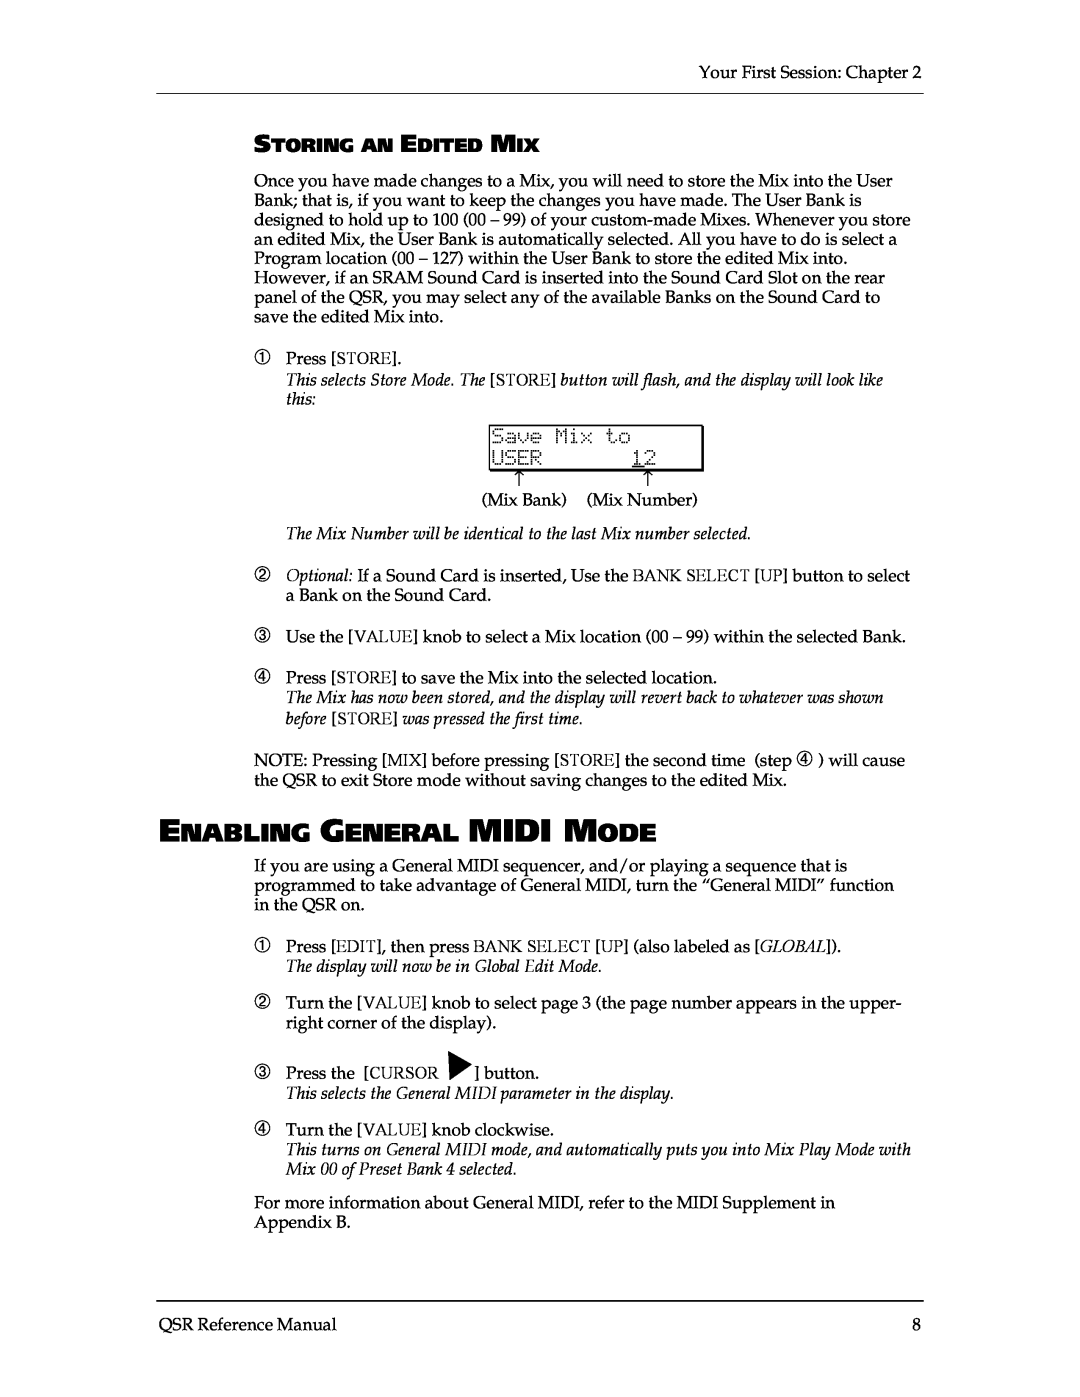 Alesis QSR 64 manual Enabling General Midi Mode, Storing An Edited Mix 